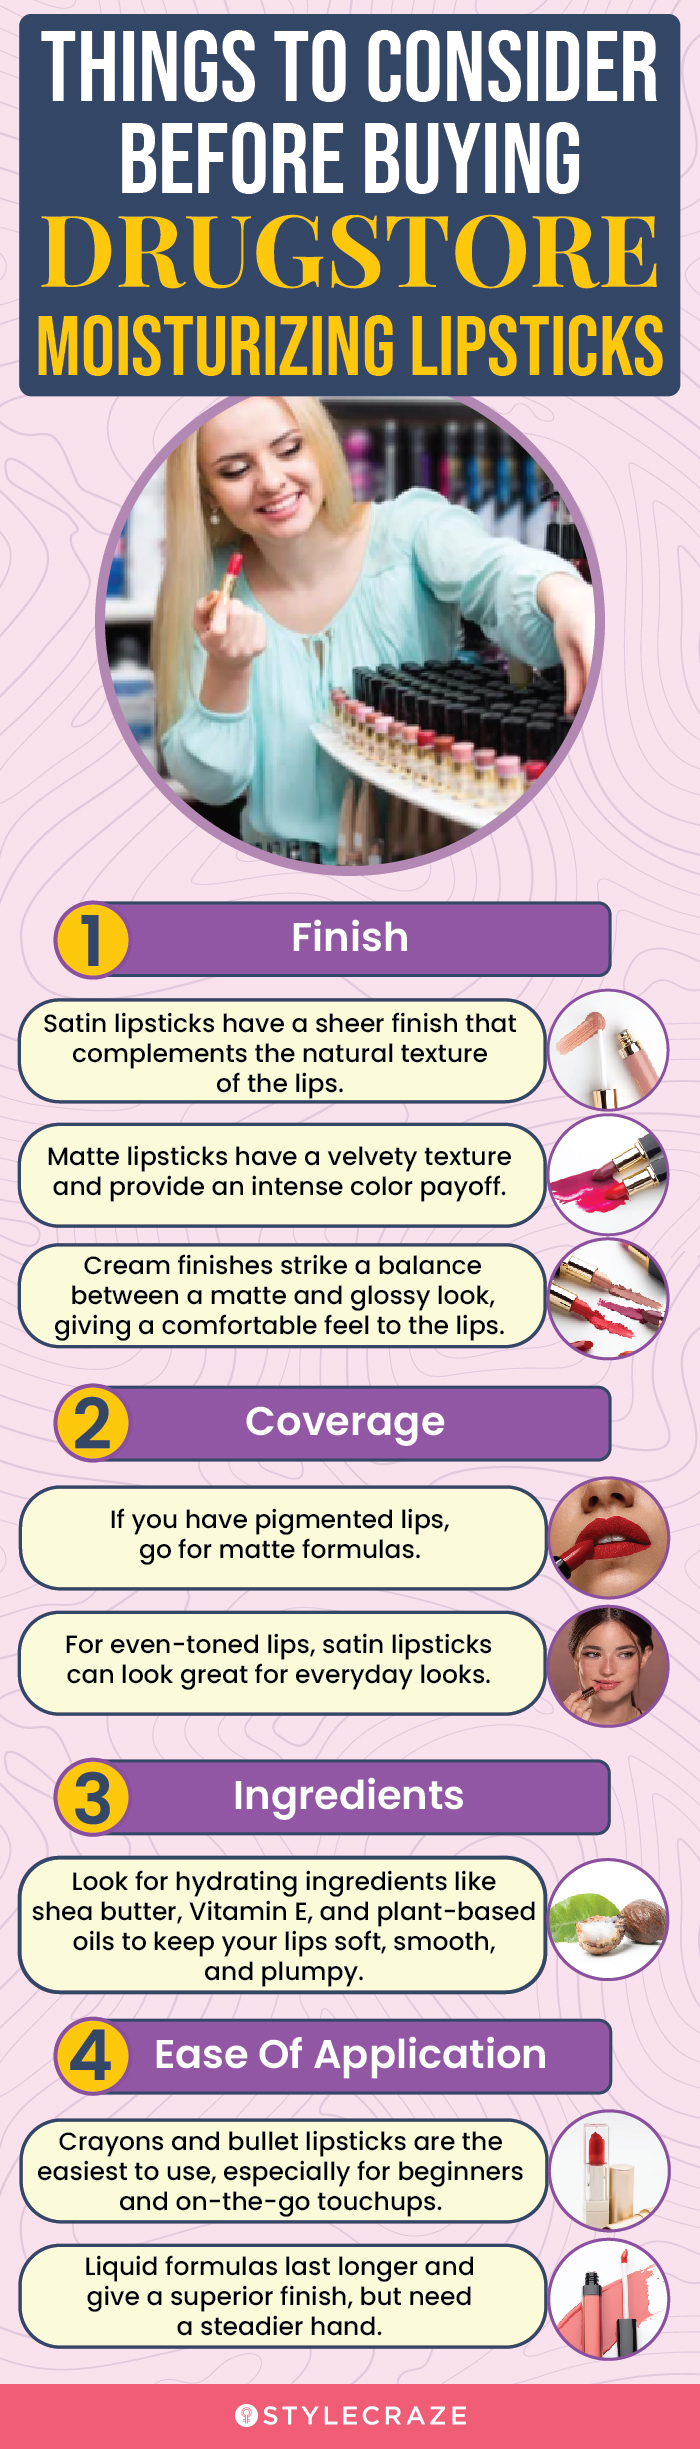 Things to Consider Before Buying Drugstore Moisturizing Lipsticks(infographic)